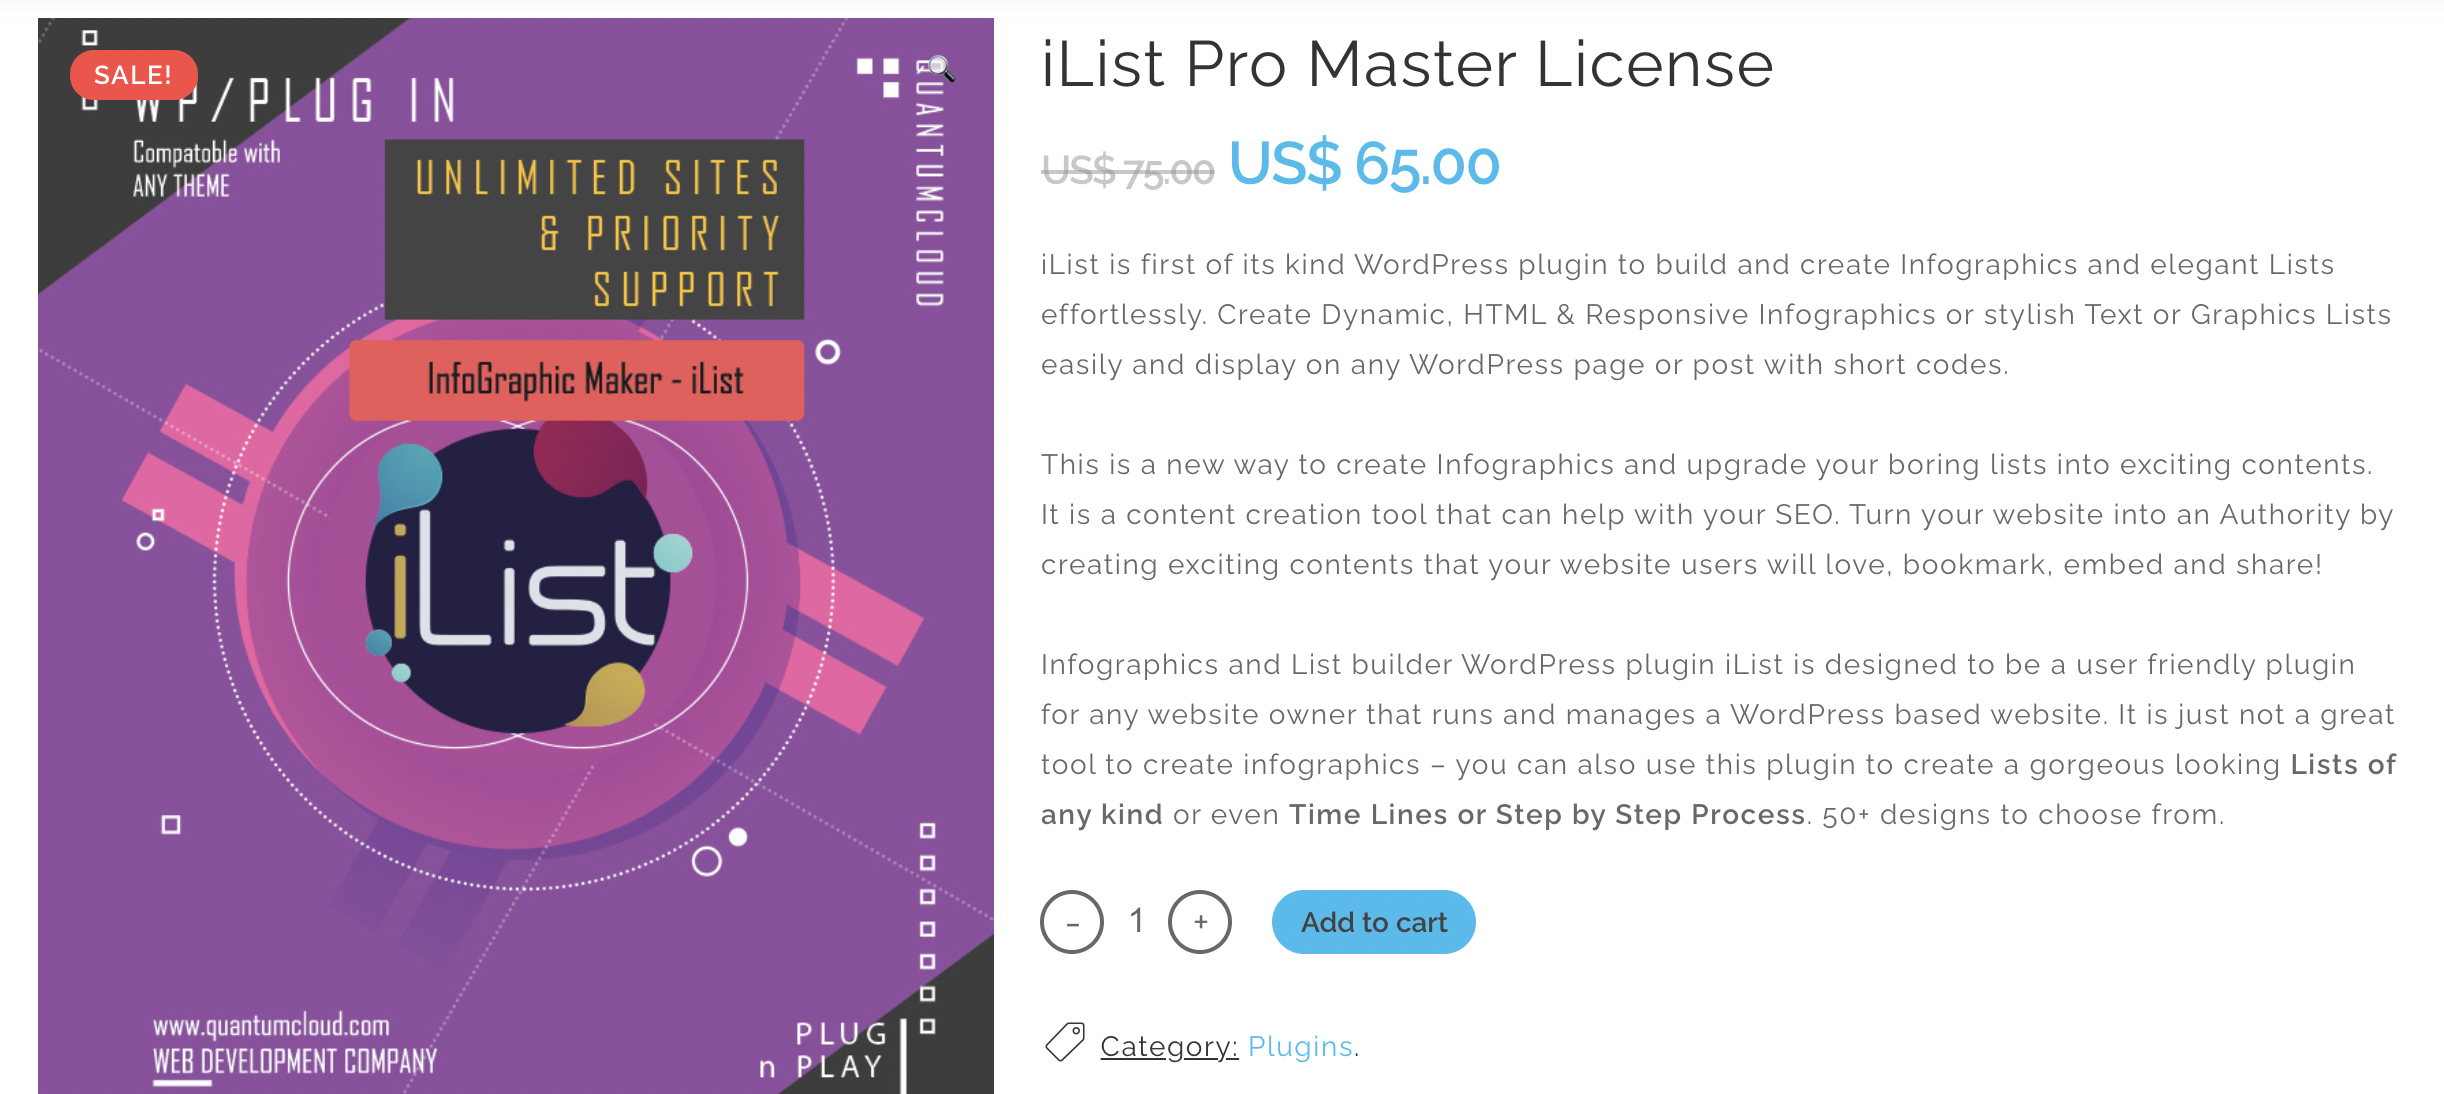 iList Pro Master License